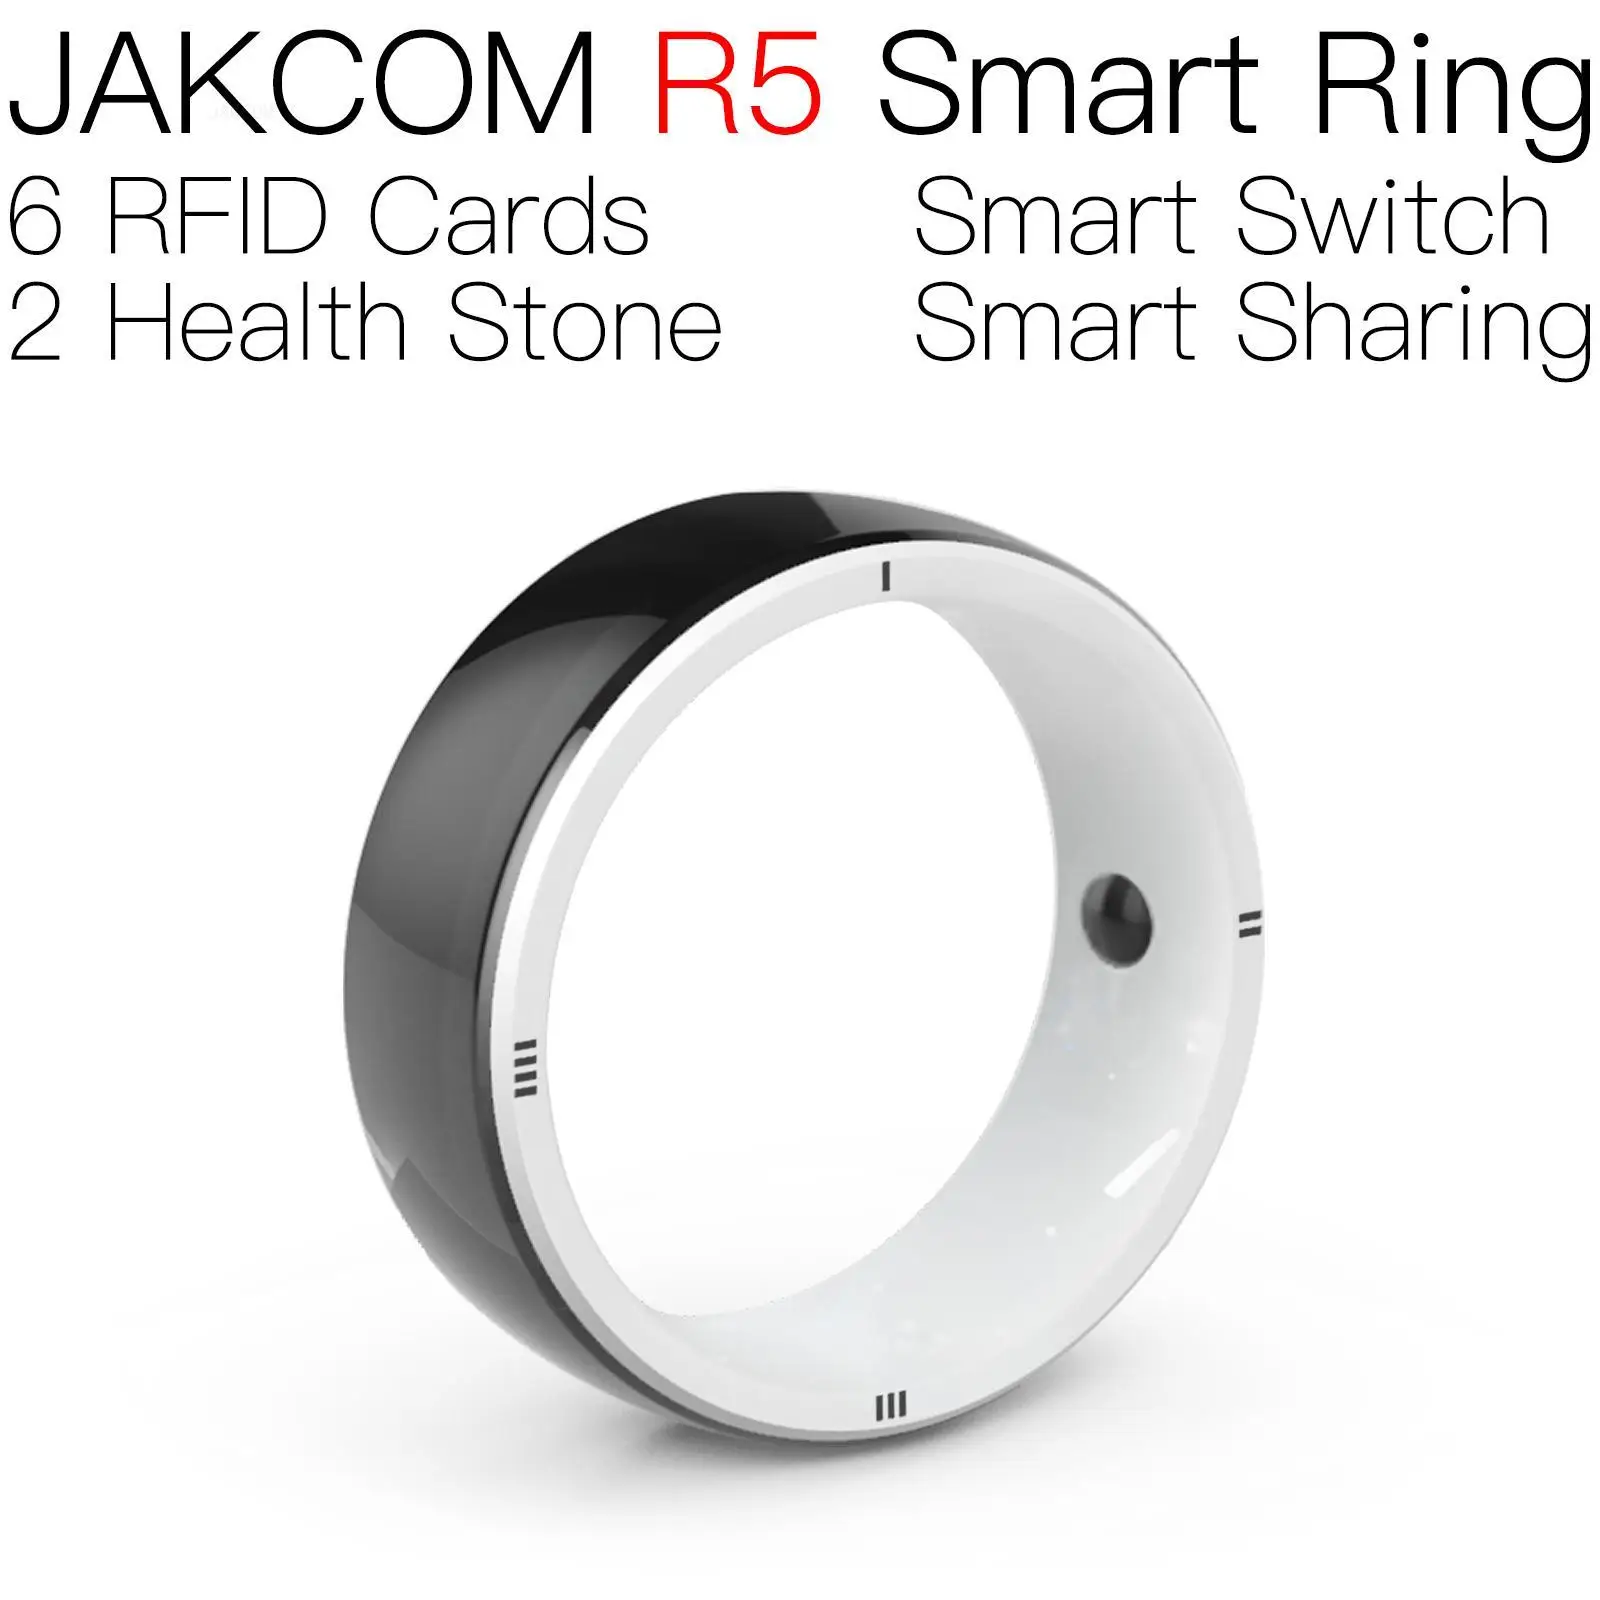 

JAKCOM R5 Smart Ring better than 125 khz rewritable t5577 sticker id chip ring 5yoa rfid blank printable nfc cards labels